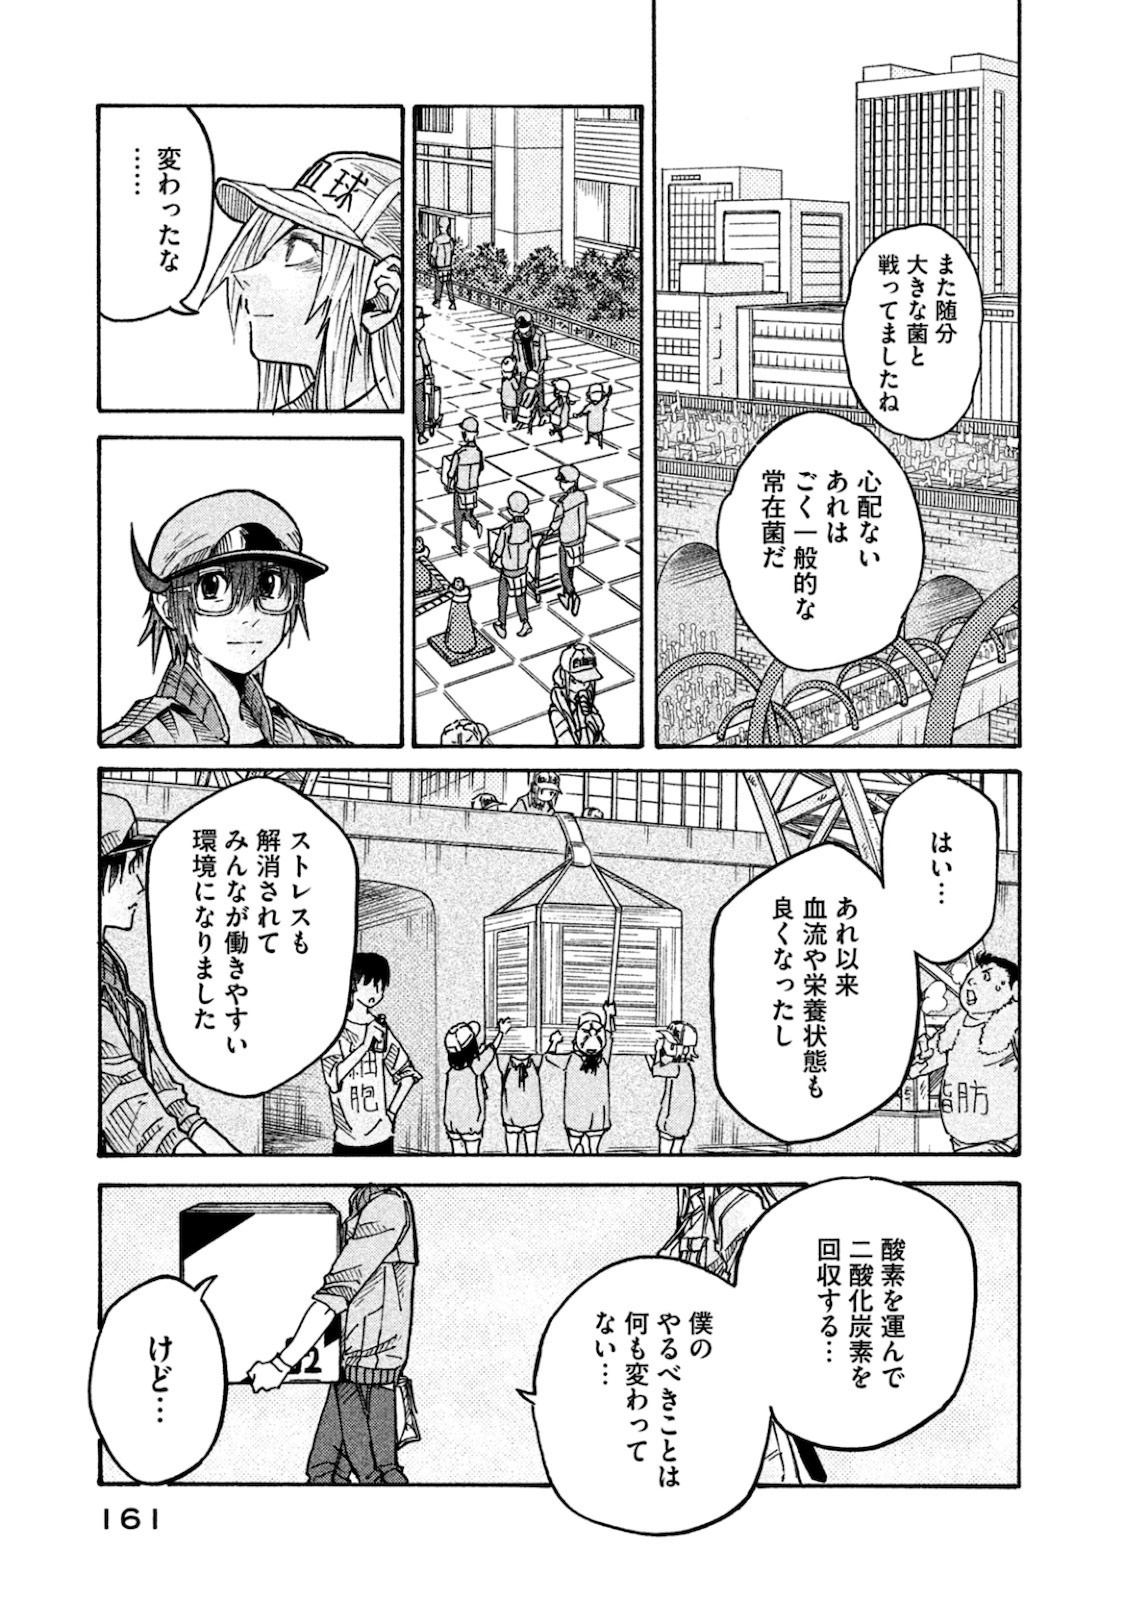 Hataraku Saibou BLACK - Chapter 10 - Page 35